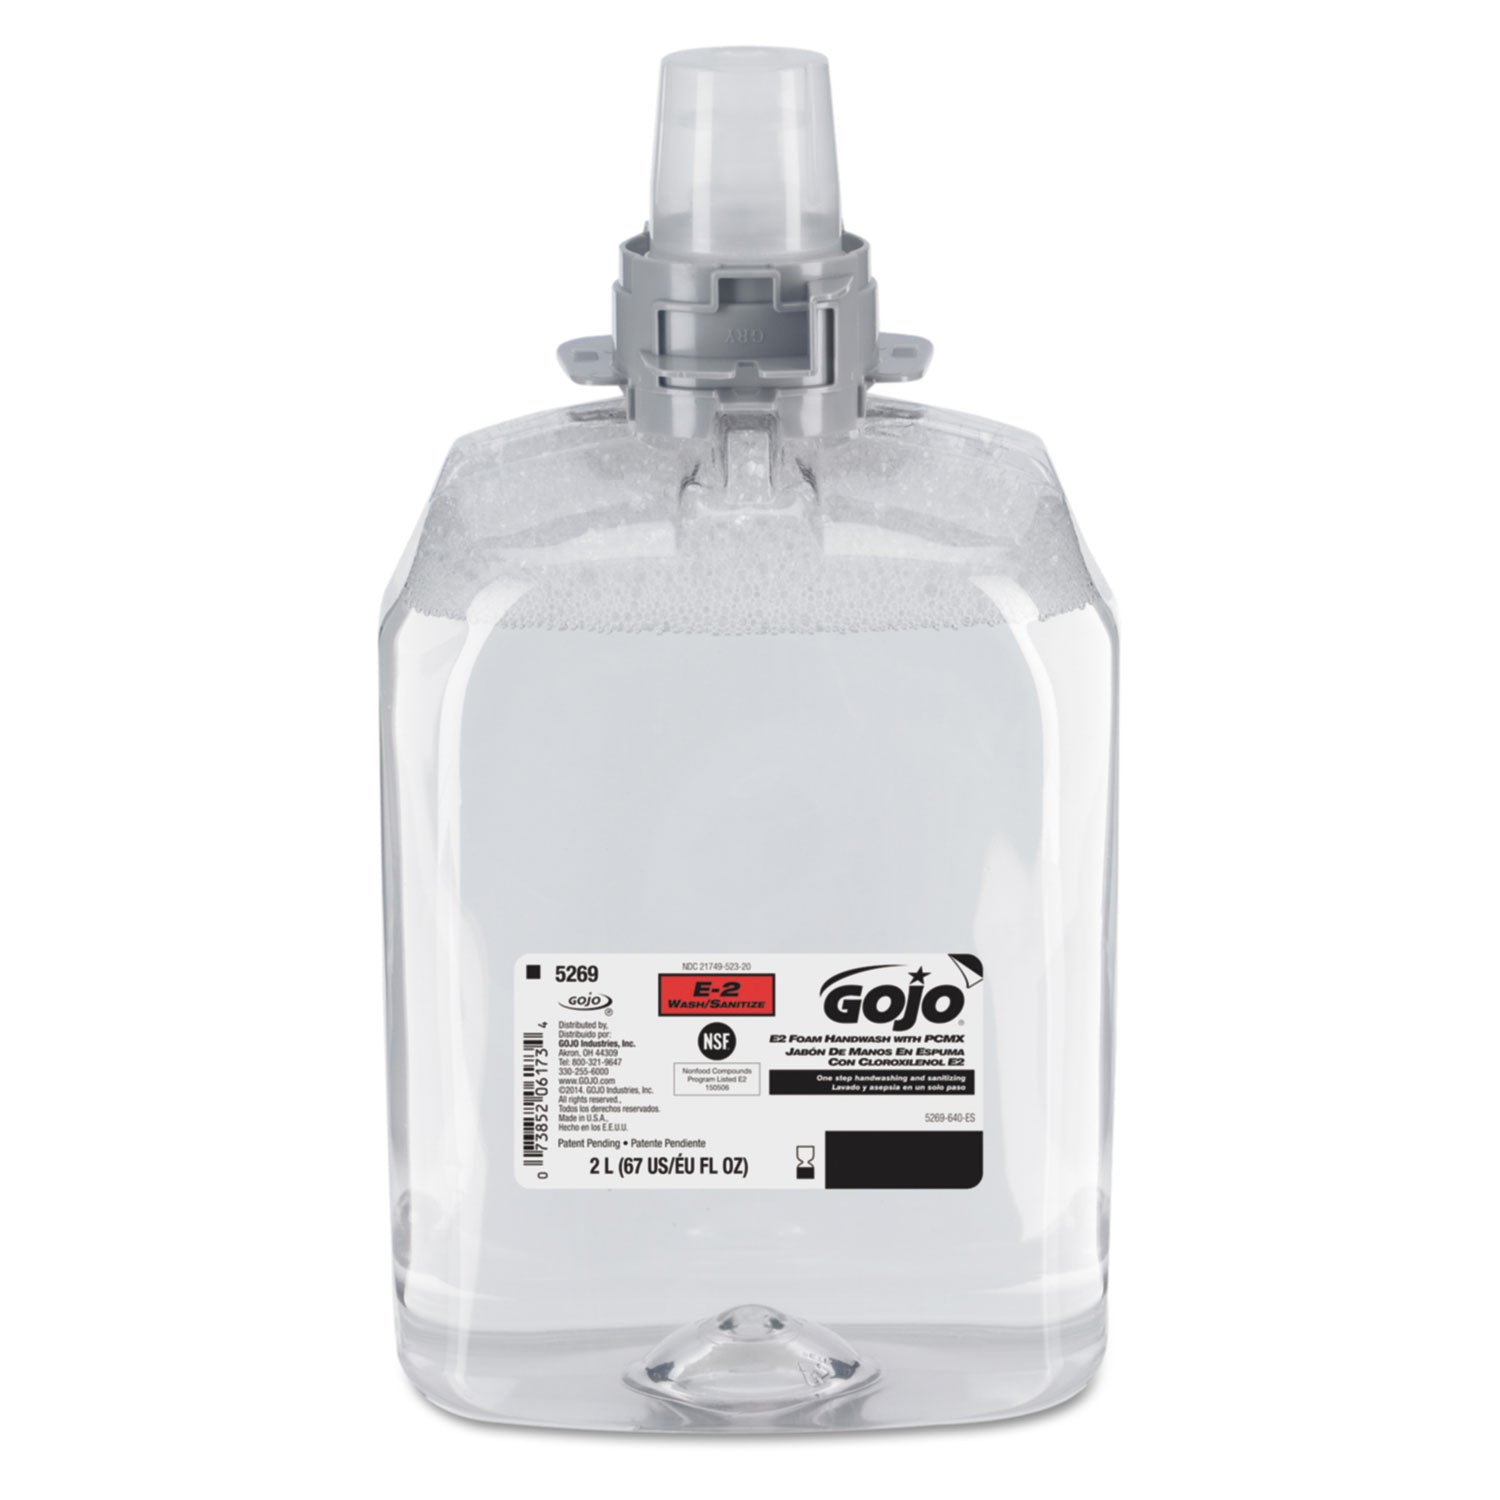 e2-foam-handwash-with-pcmx-for-fmx-20-dispensers-fragrance-free-2000-ml-refill-2-carton_goj526902 - 1